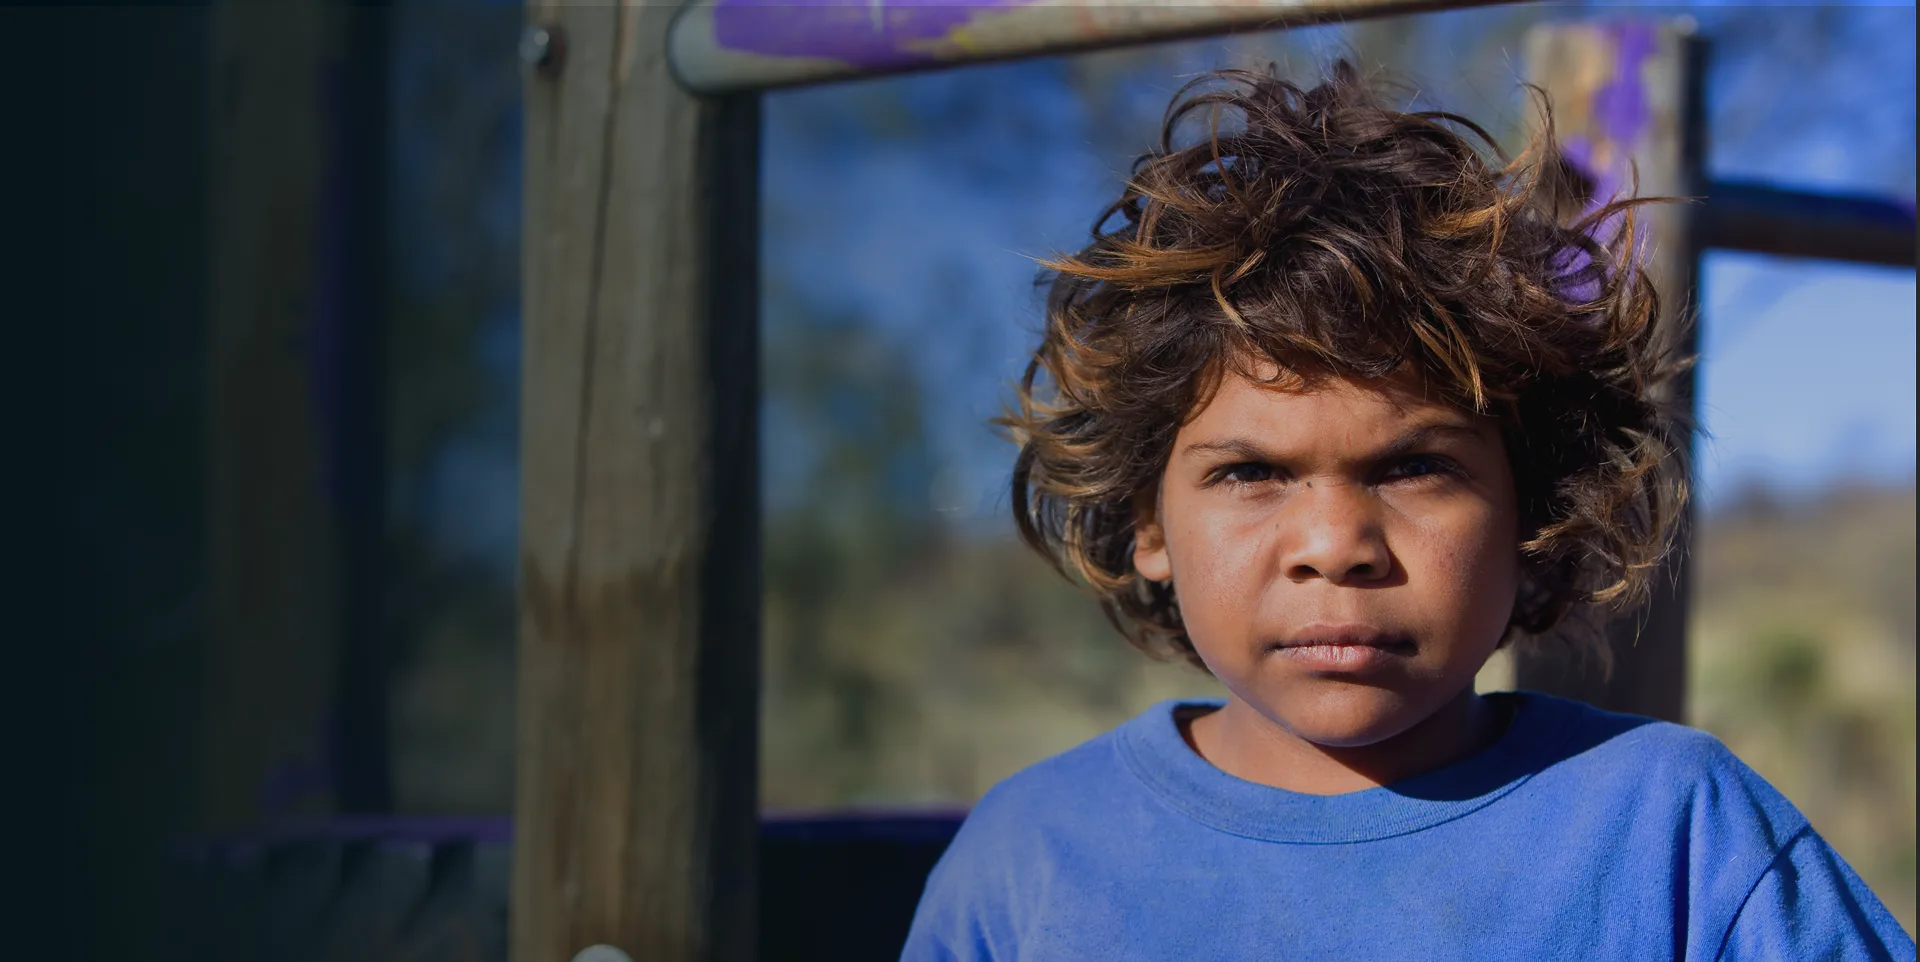 Young Aboriginal boy wearing a blue t-shirt looking at the camera